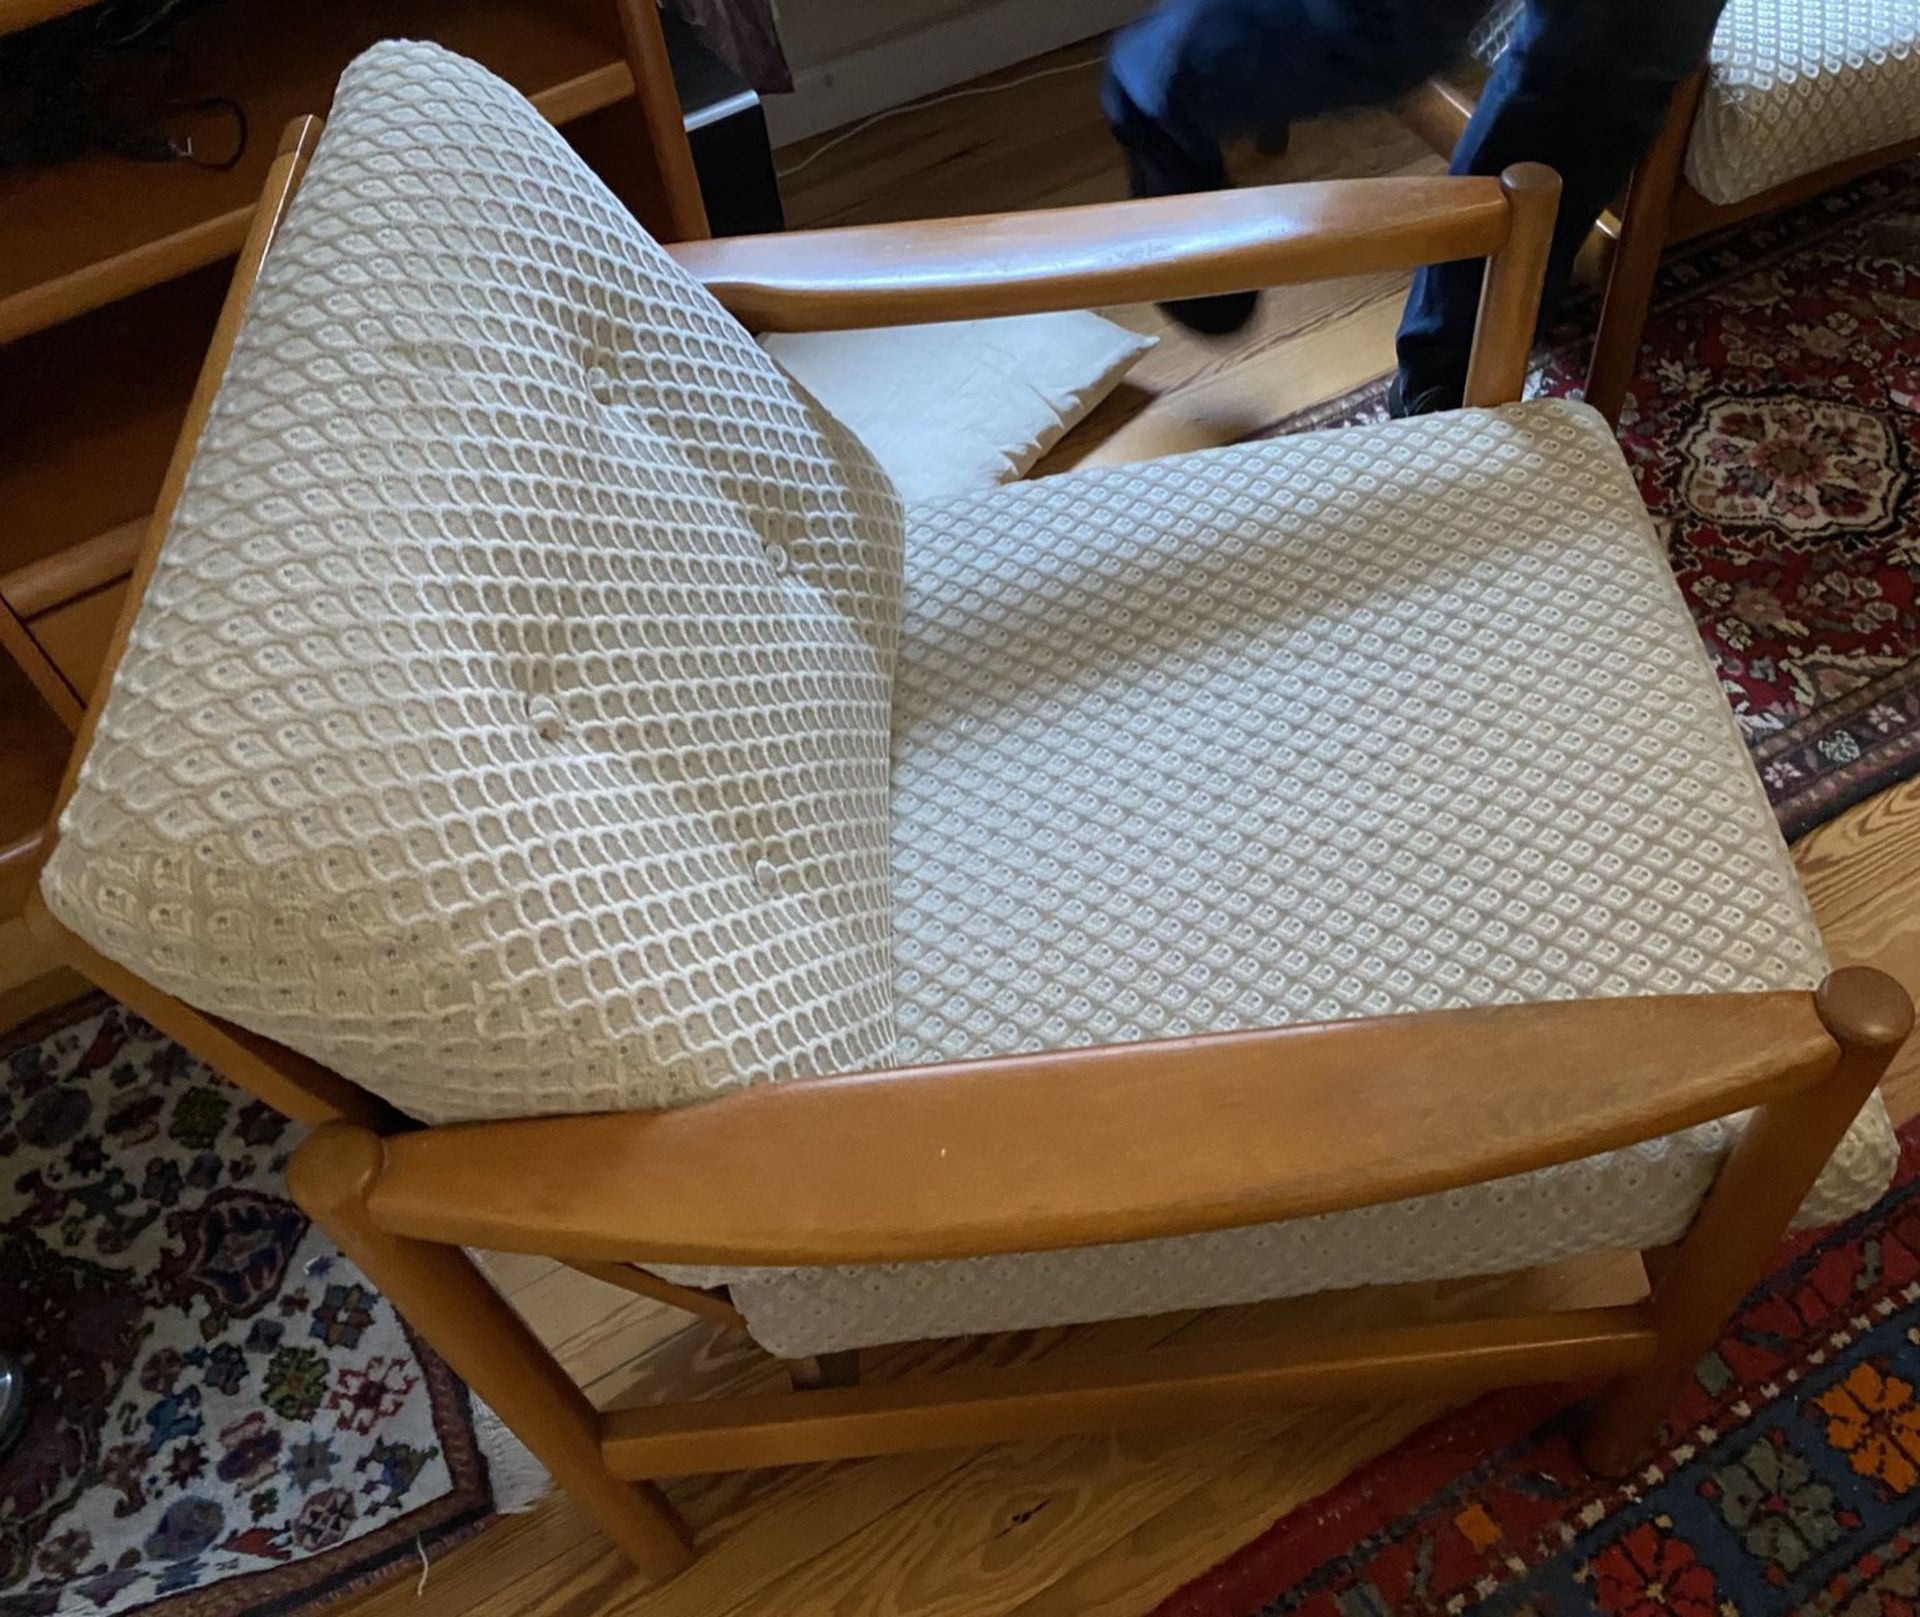 2 Armlehnstühle, Teakholz, 60-er Jahre Design, Dänemark? - Bild 4 aus 7